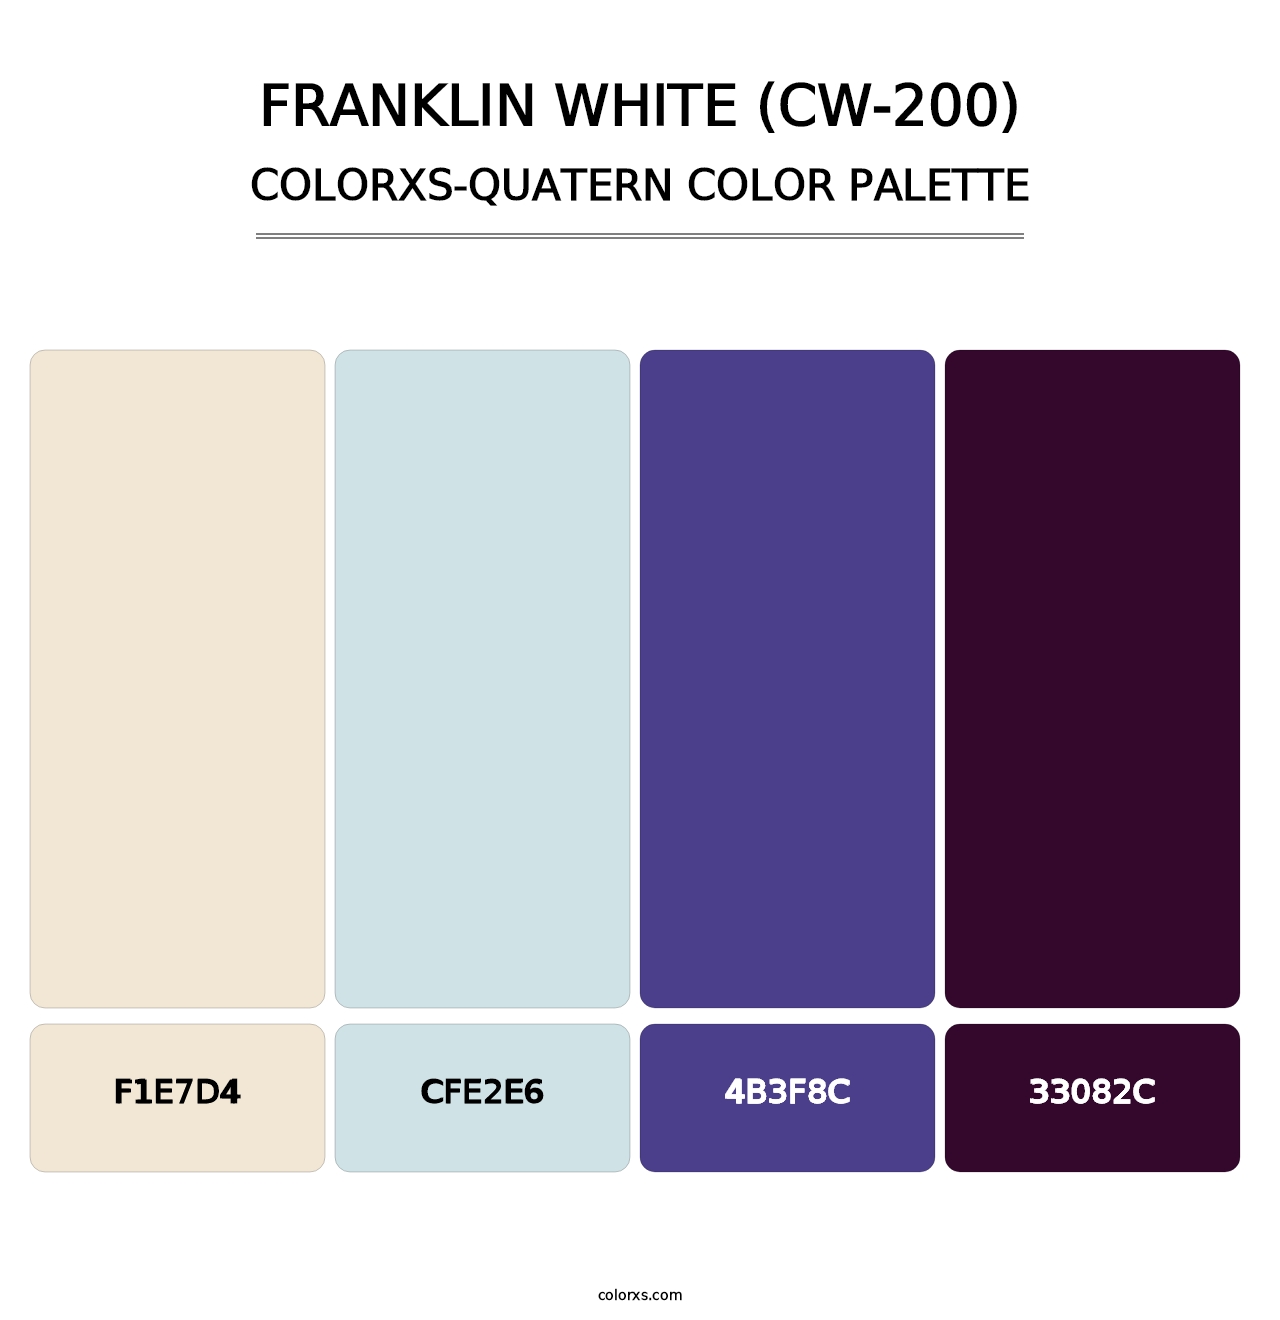 Franklin White (CW-200) - Colorxs Quatern Palette